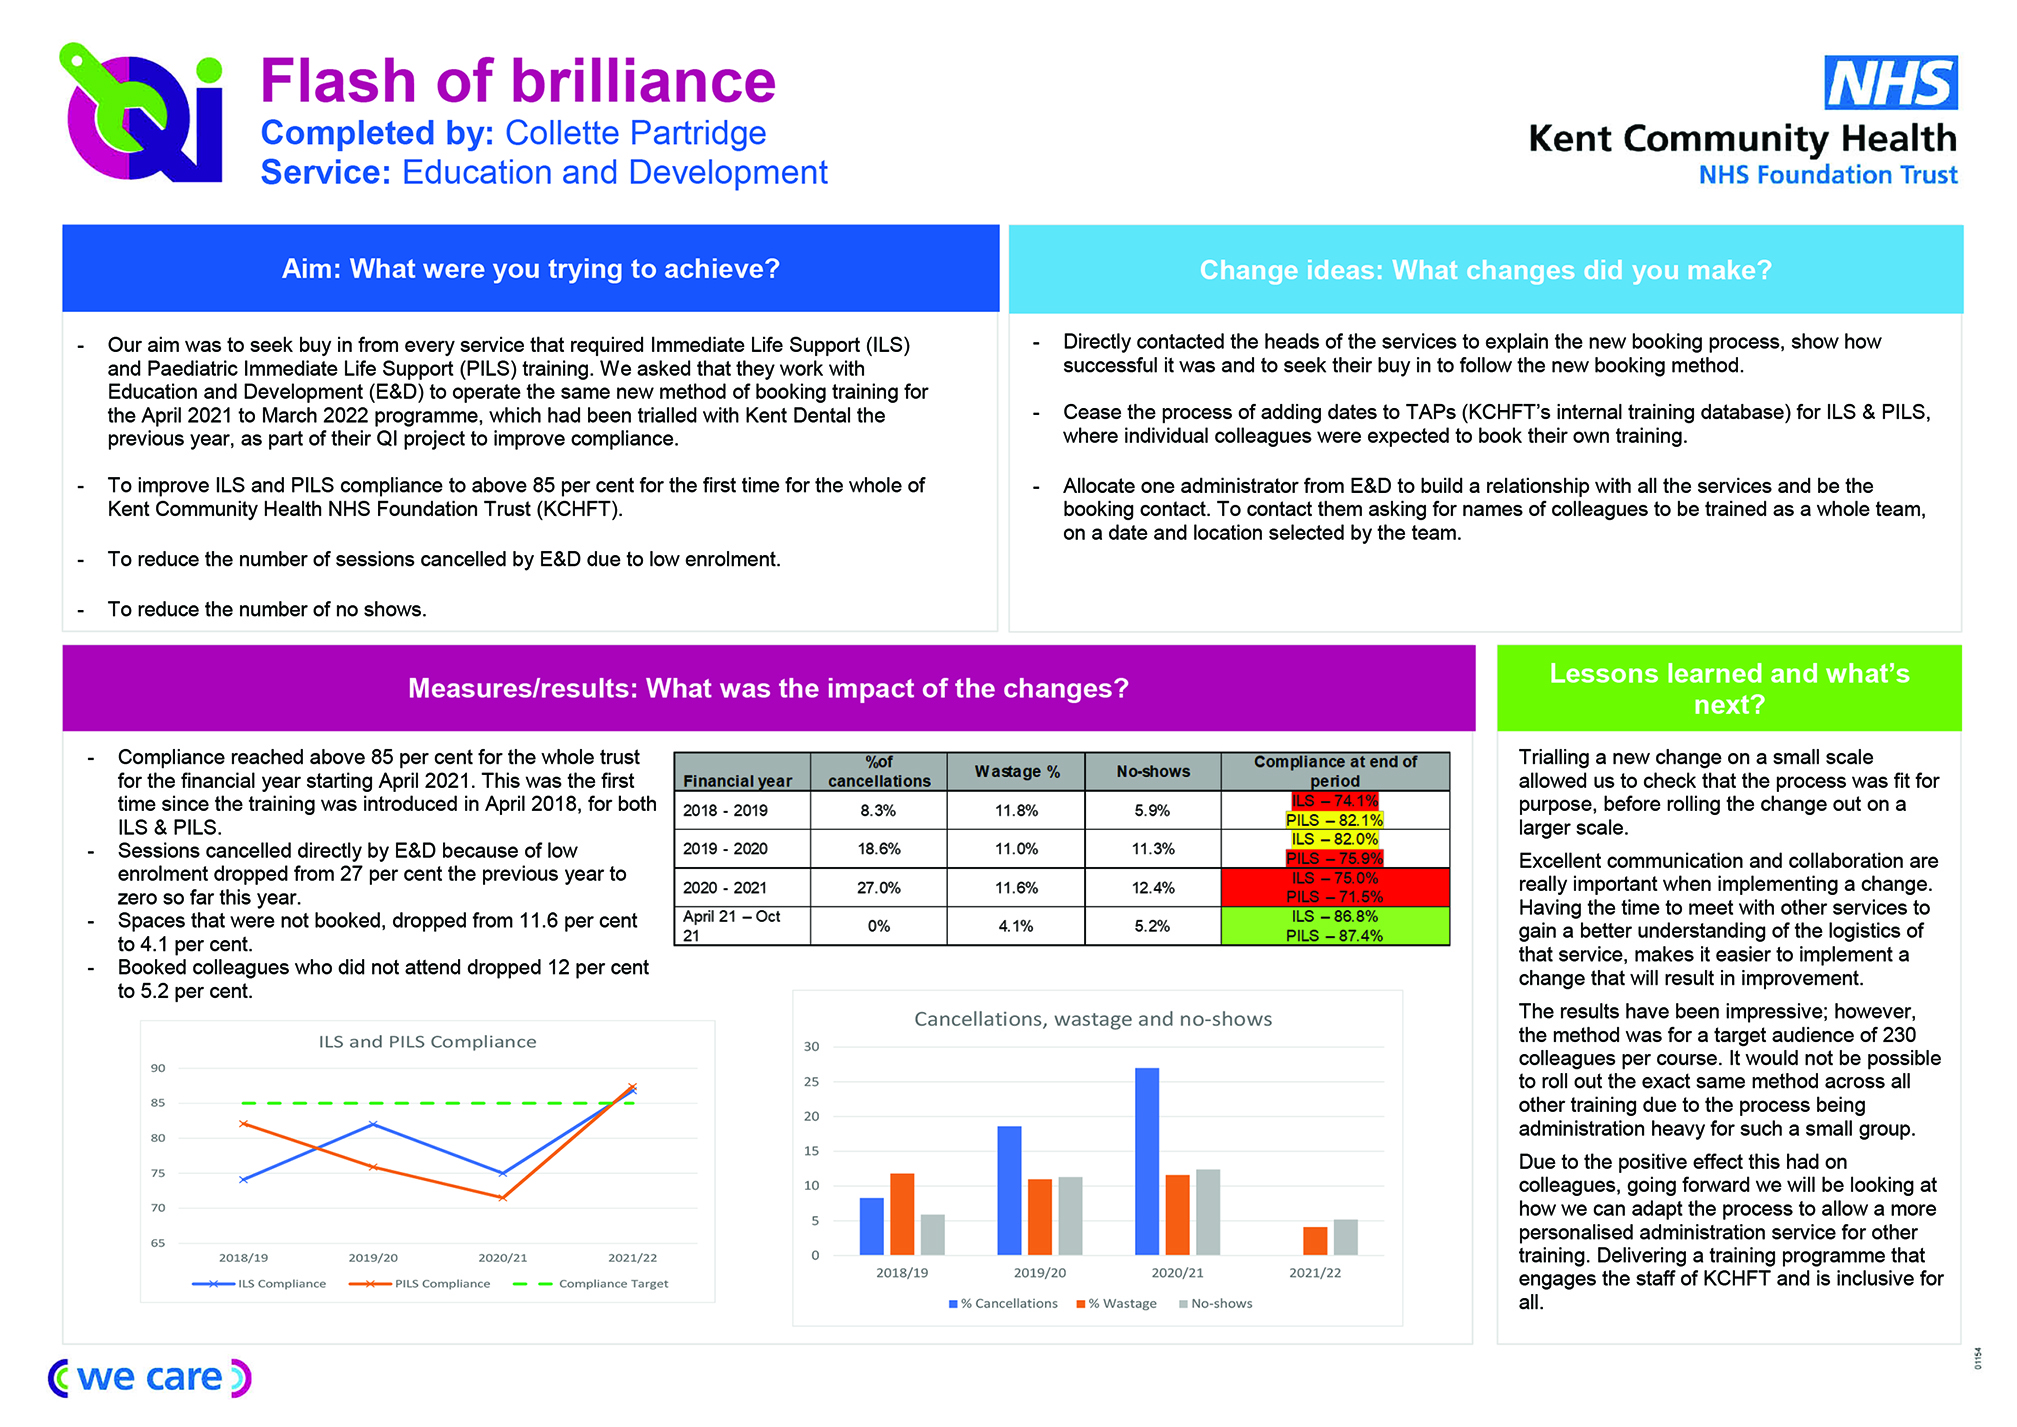 Collette Partridge flash of brilliance improving training compliance